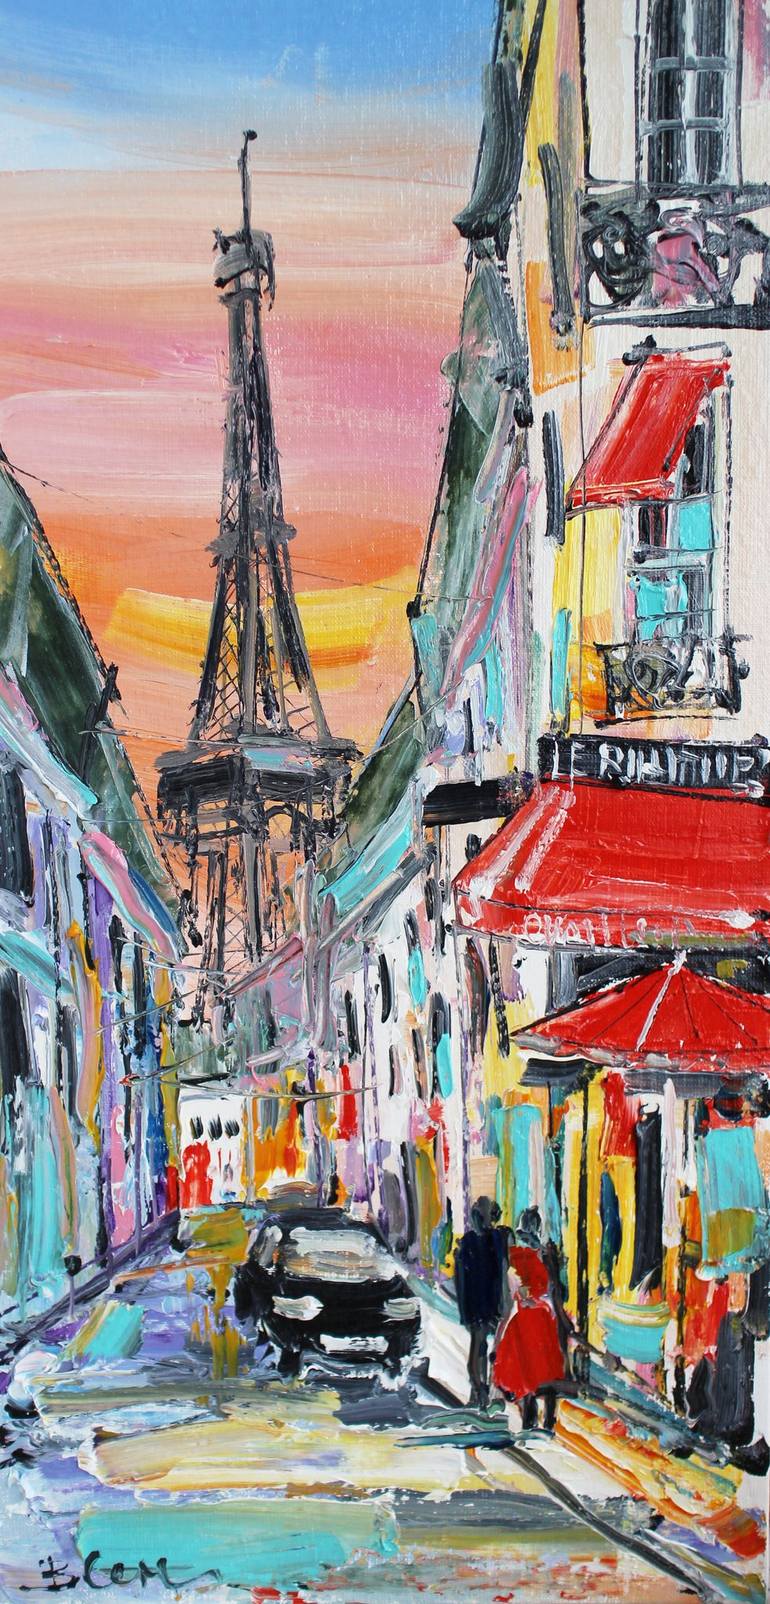 Mini canvas painting . Eiffel tower